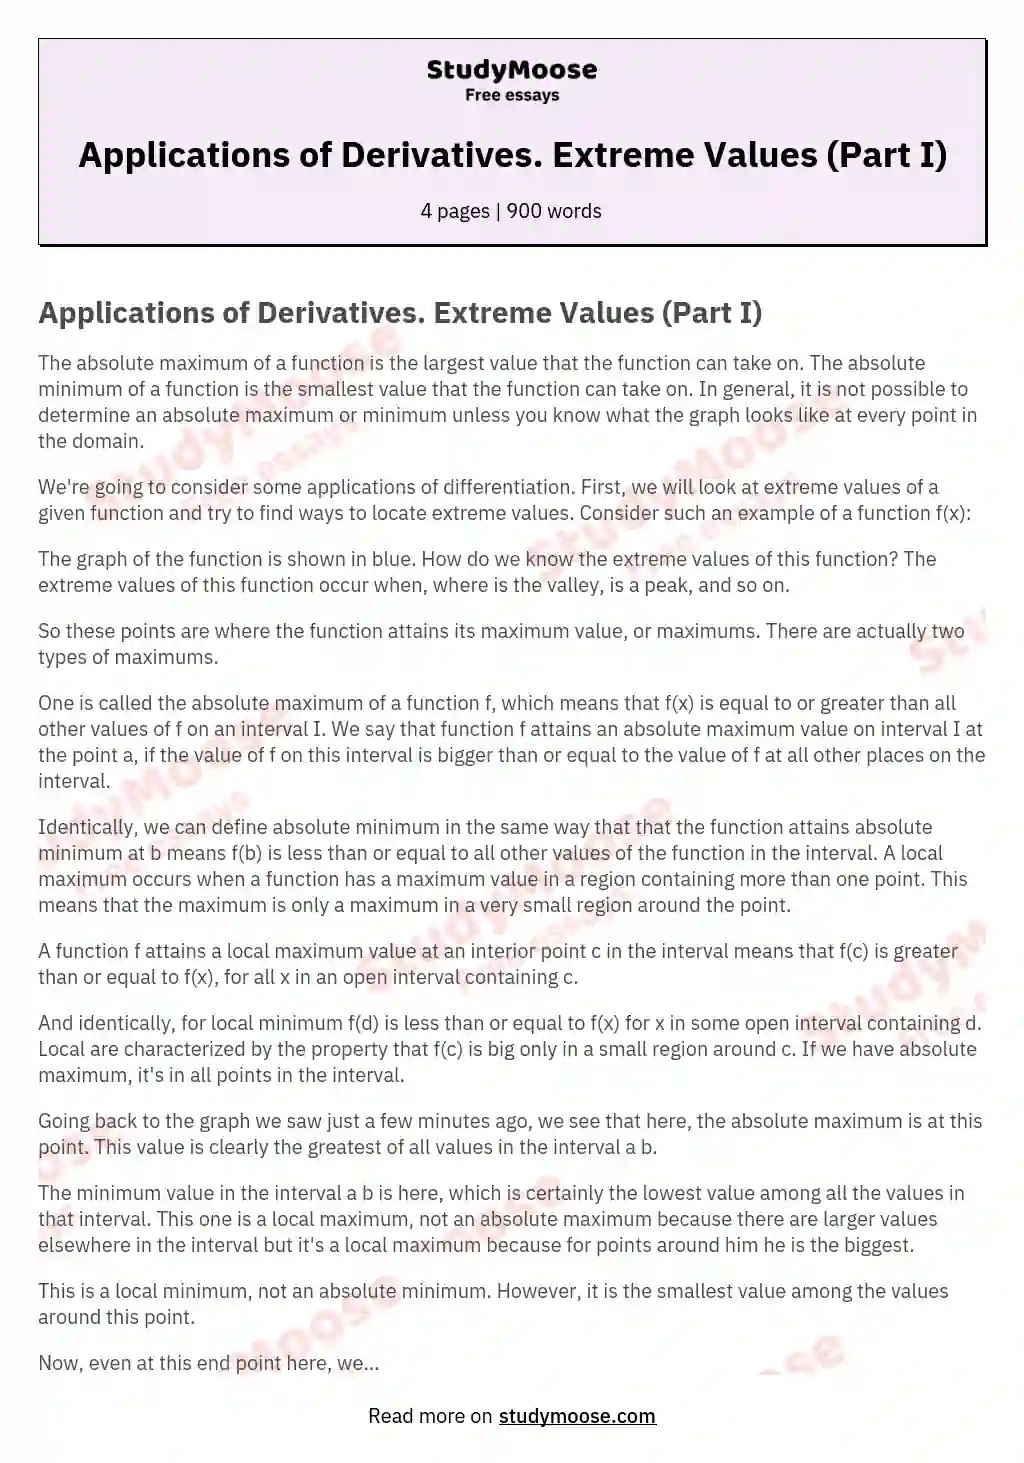 Applications of Derivatives. Extreme Values (Part I) essay